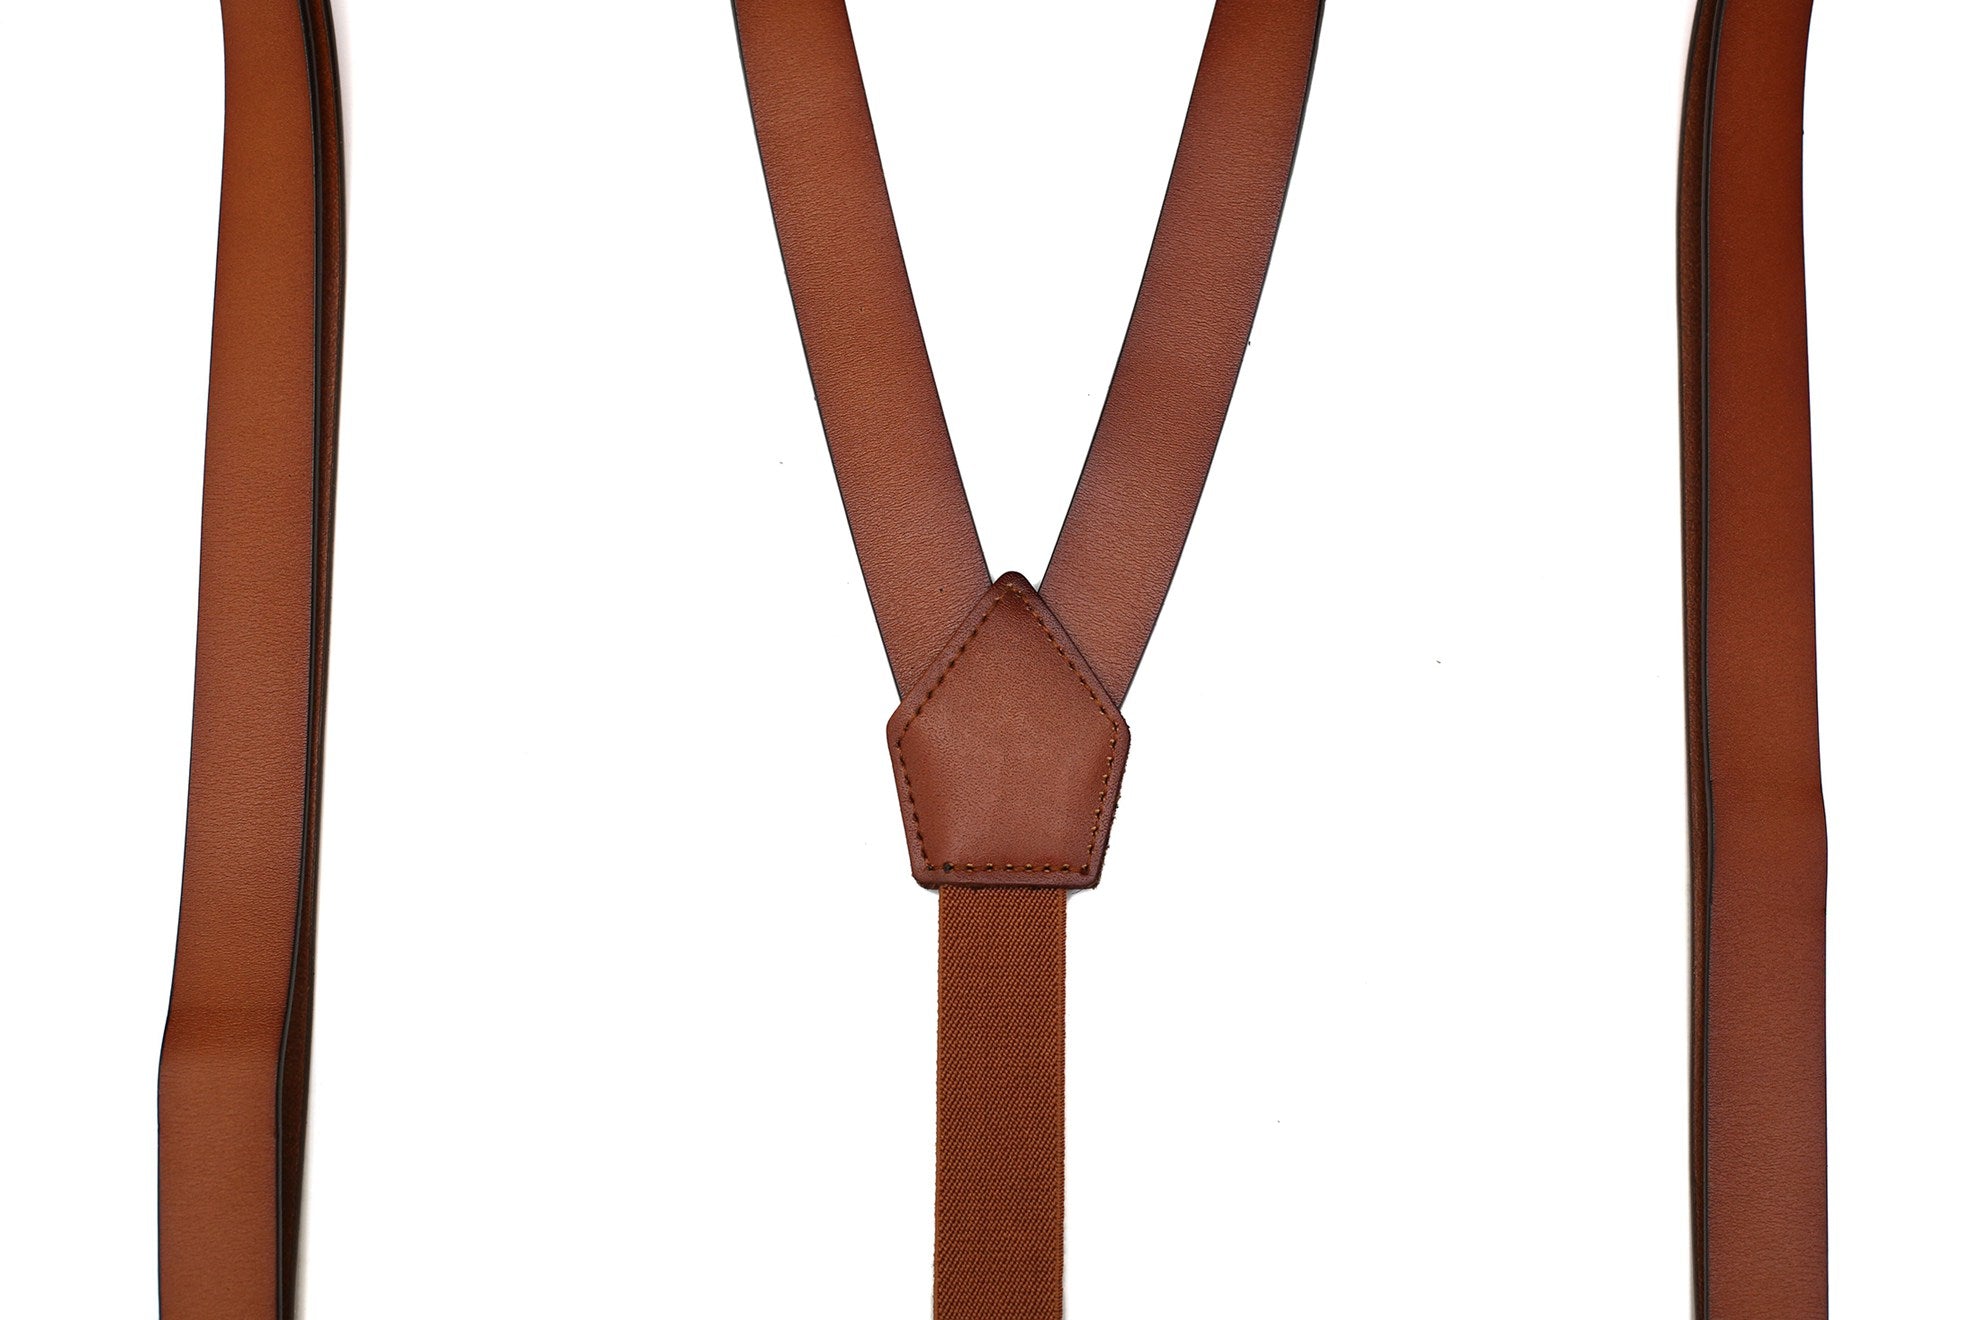 Adjustable Suspenders for Men Bronze Metal Clips Braces with Leather